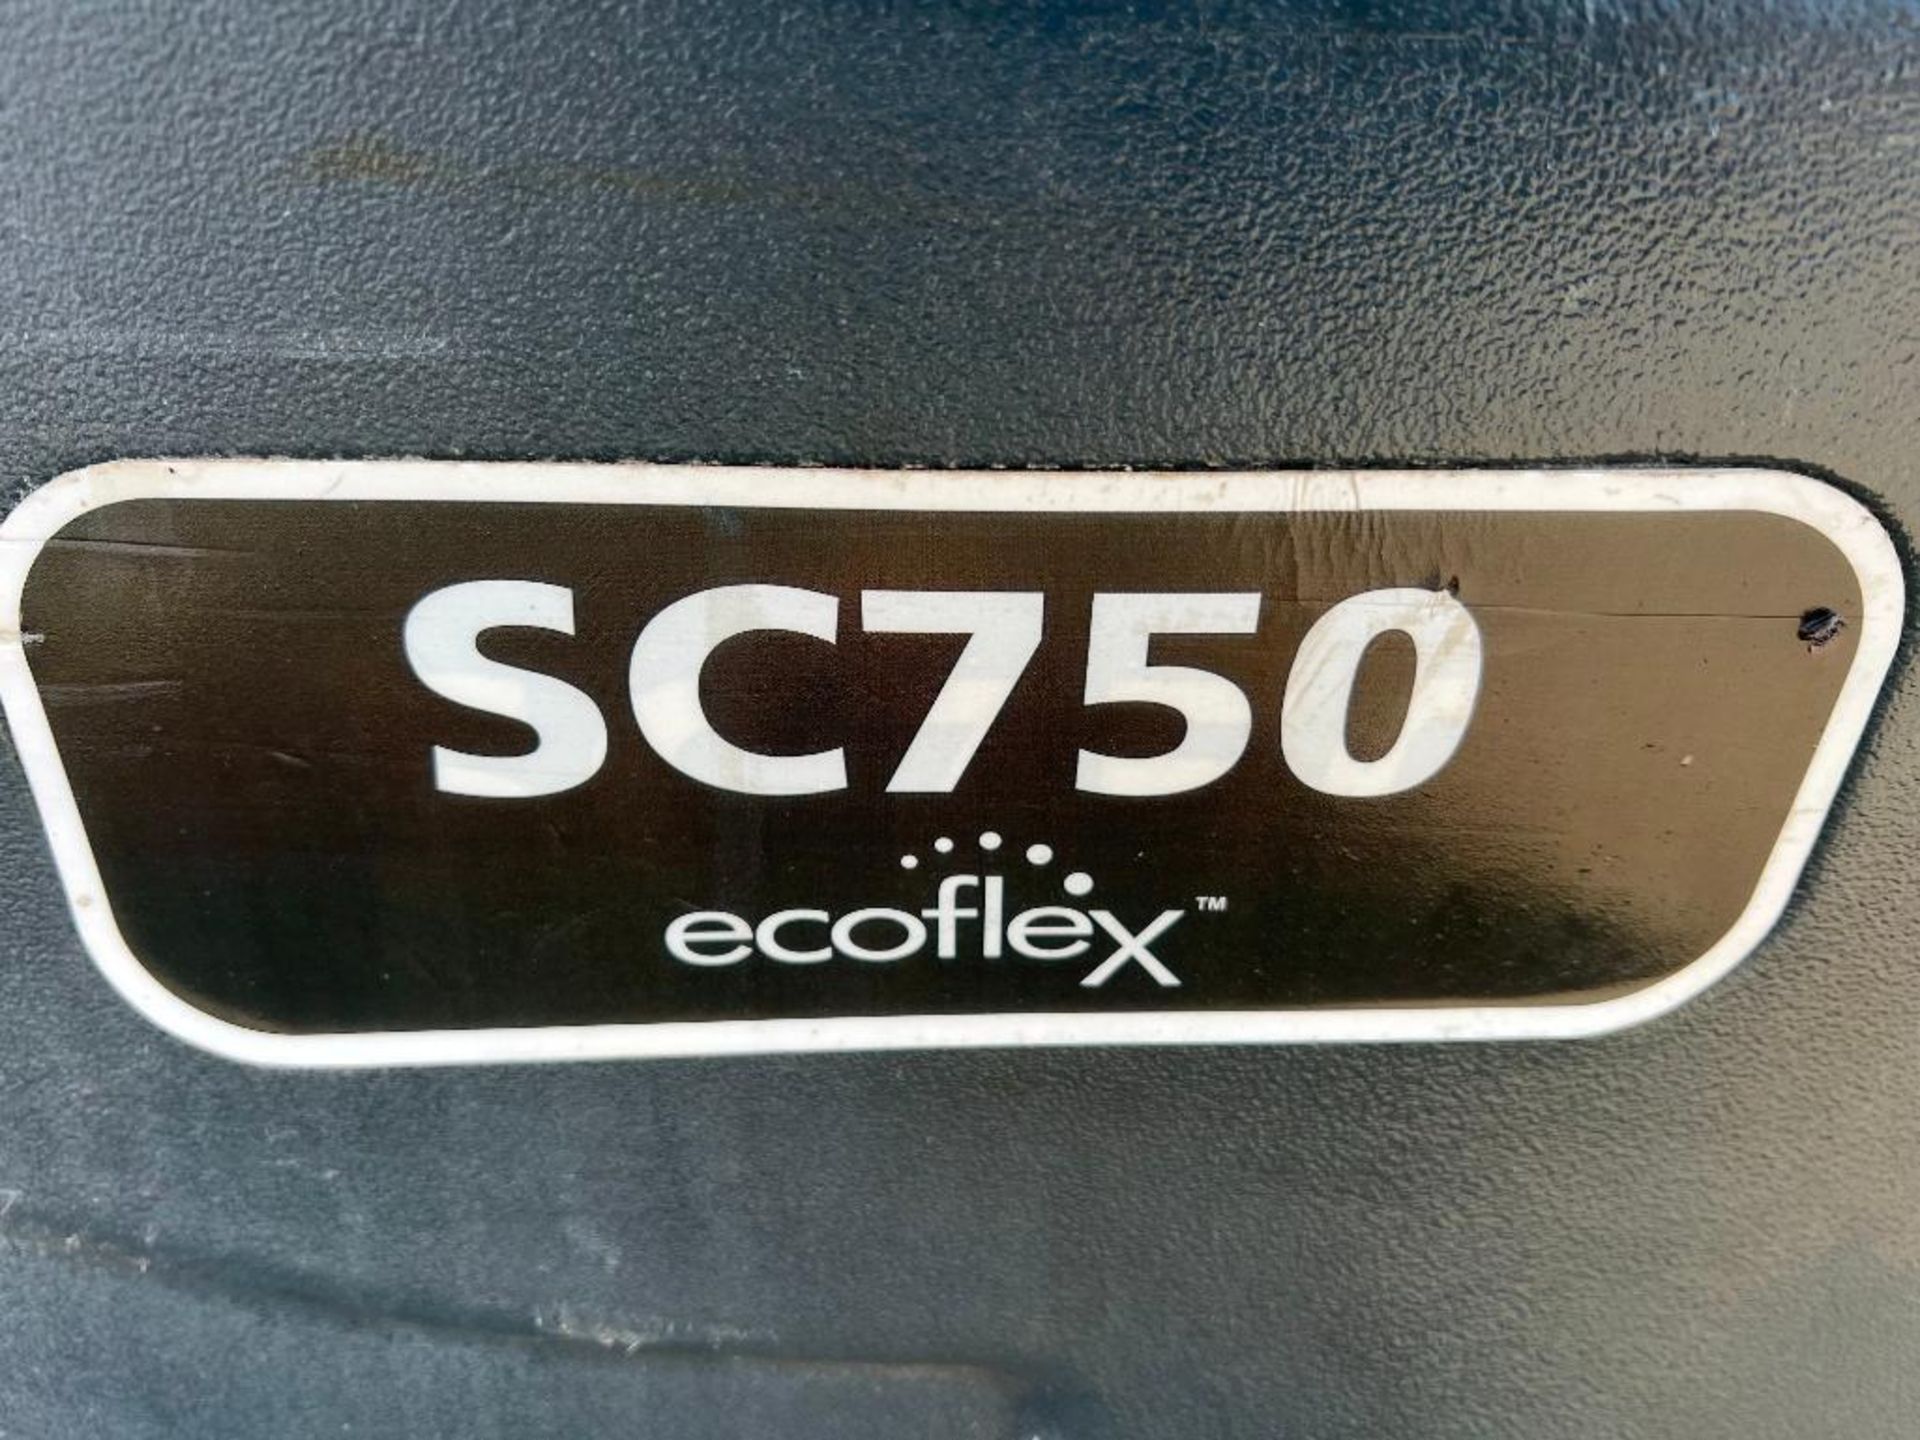 Advance SC750 Ecoflex Floor Scrubber, Model #SC750-26D, Serial #N4000044259, 24 V, Type E Floor Clea - Image 8 of 9